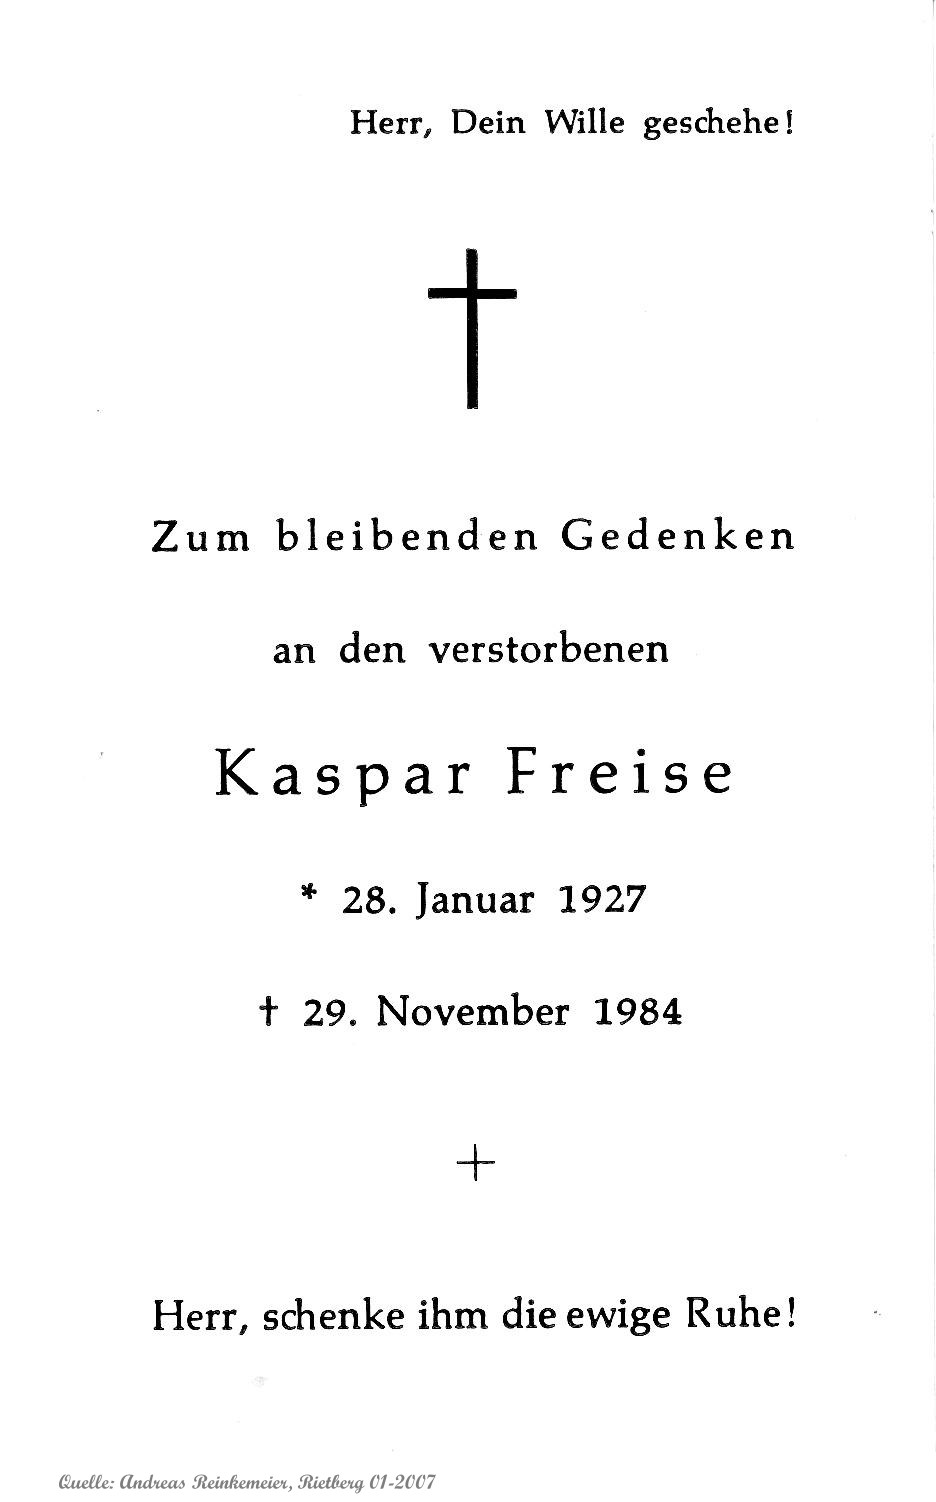 Kaspar Freise